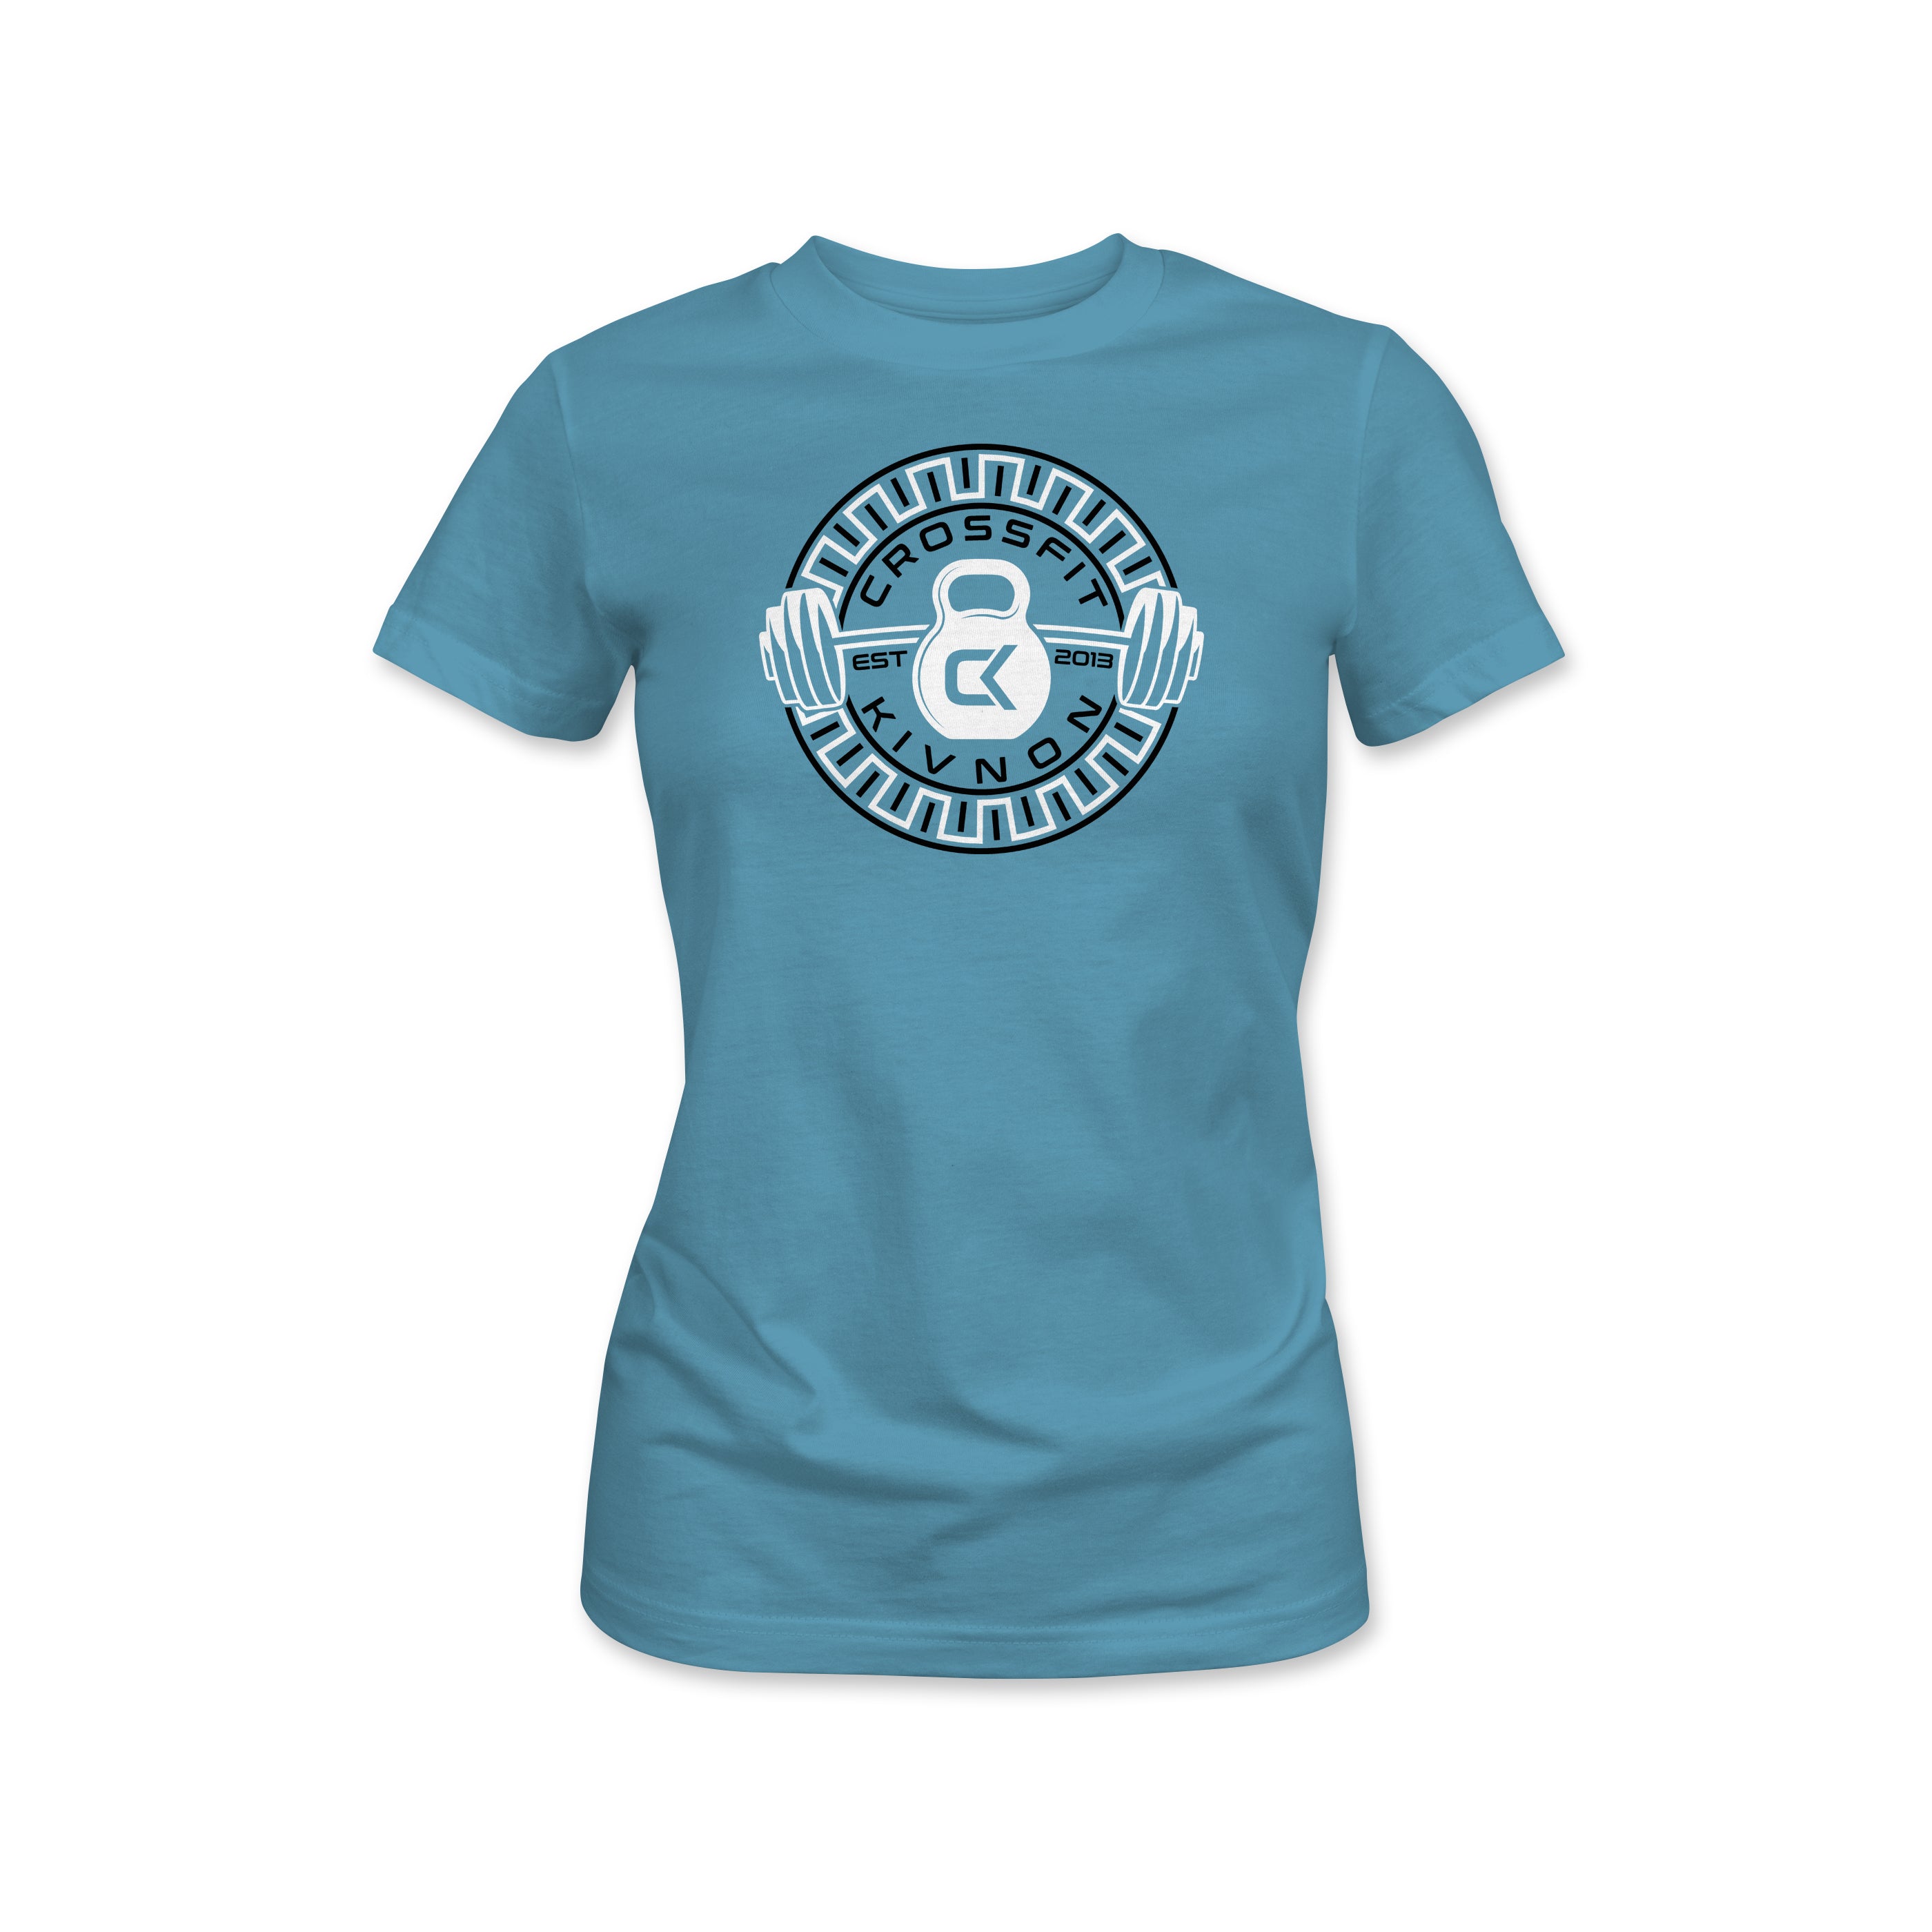 Crossfit Kivnon Woman's T-Shirt